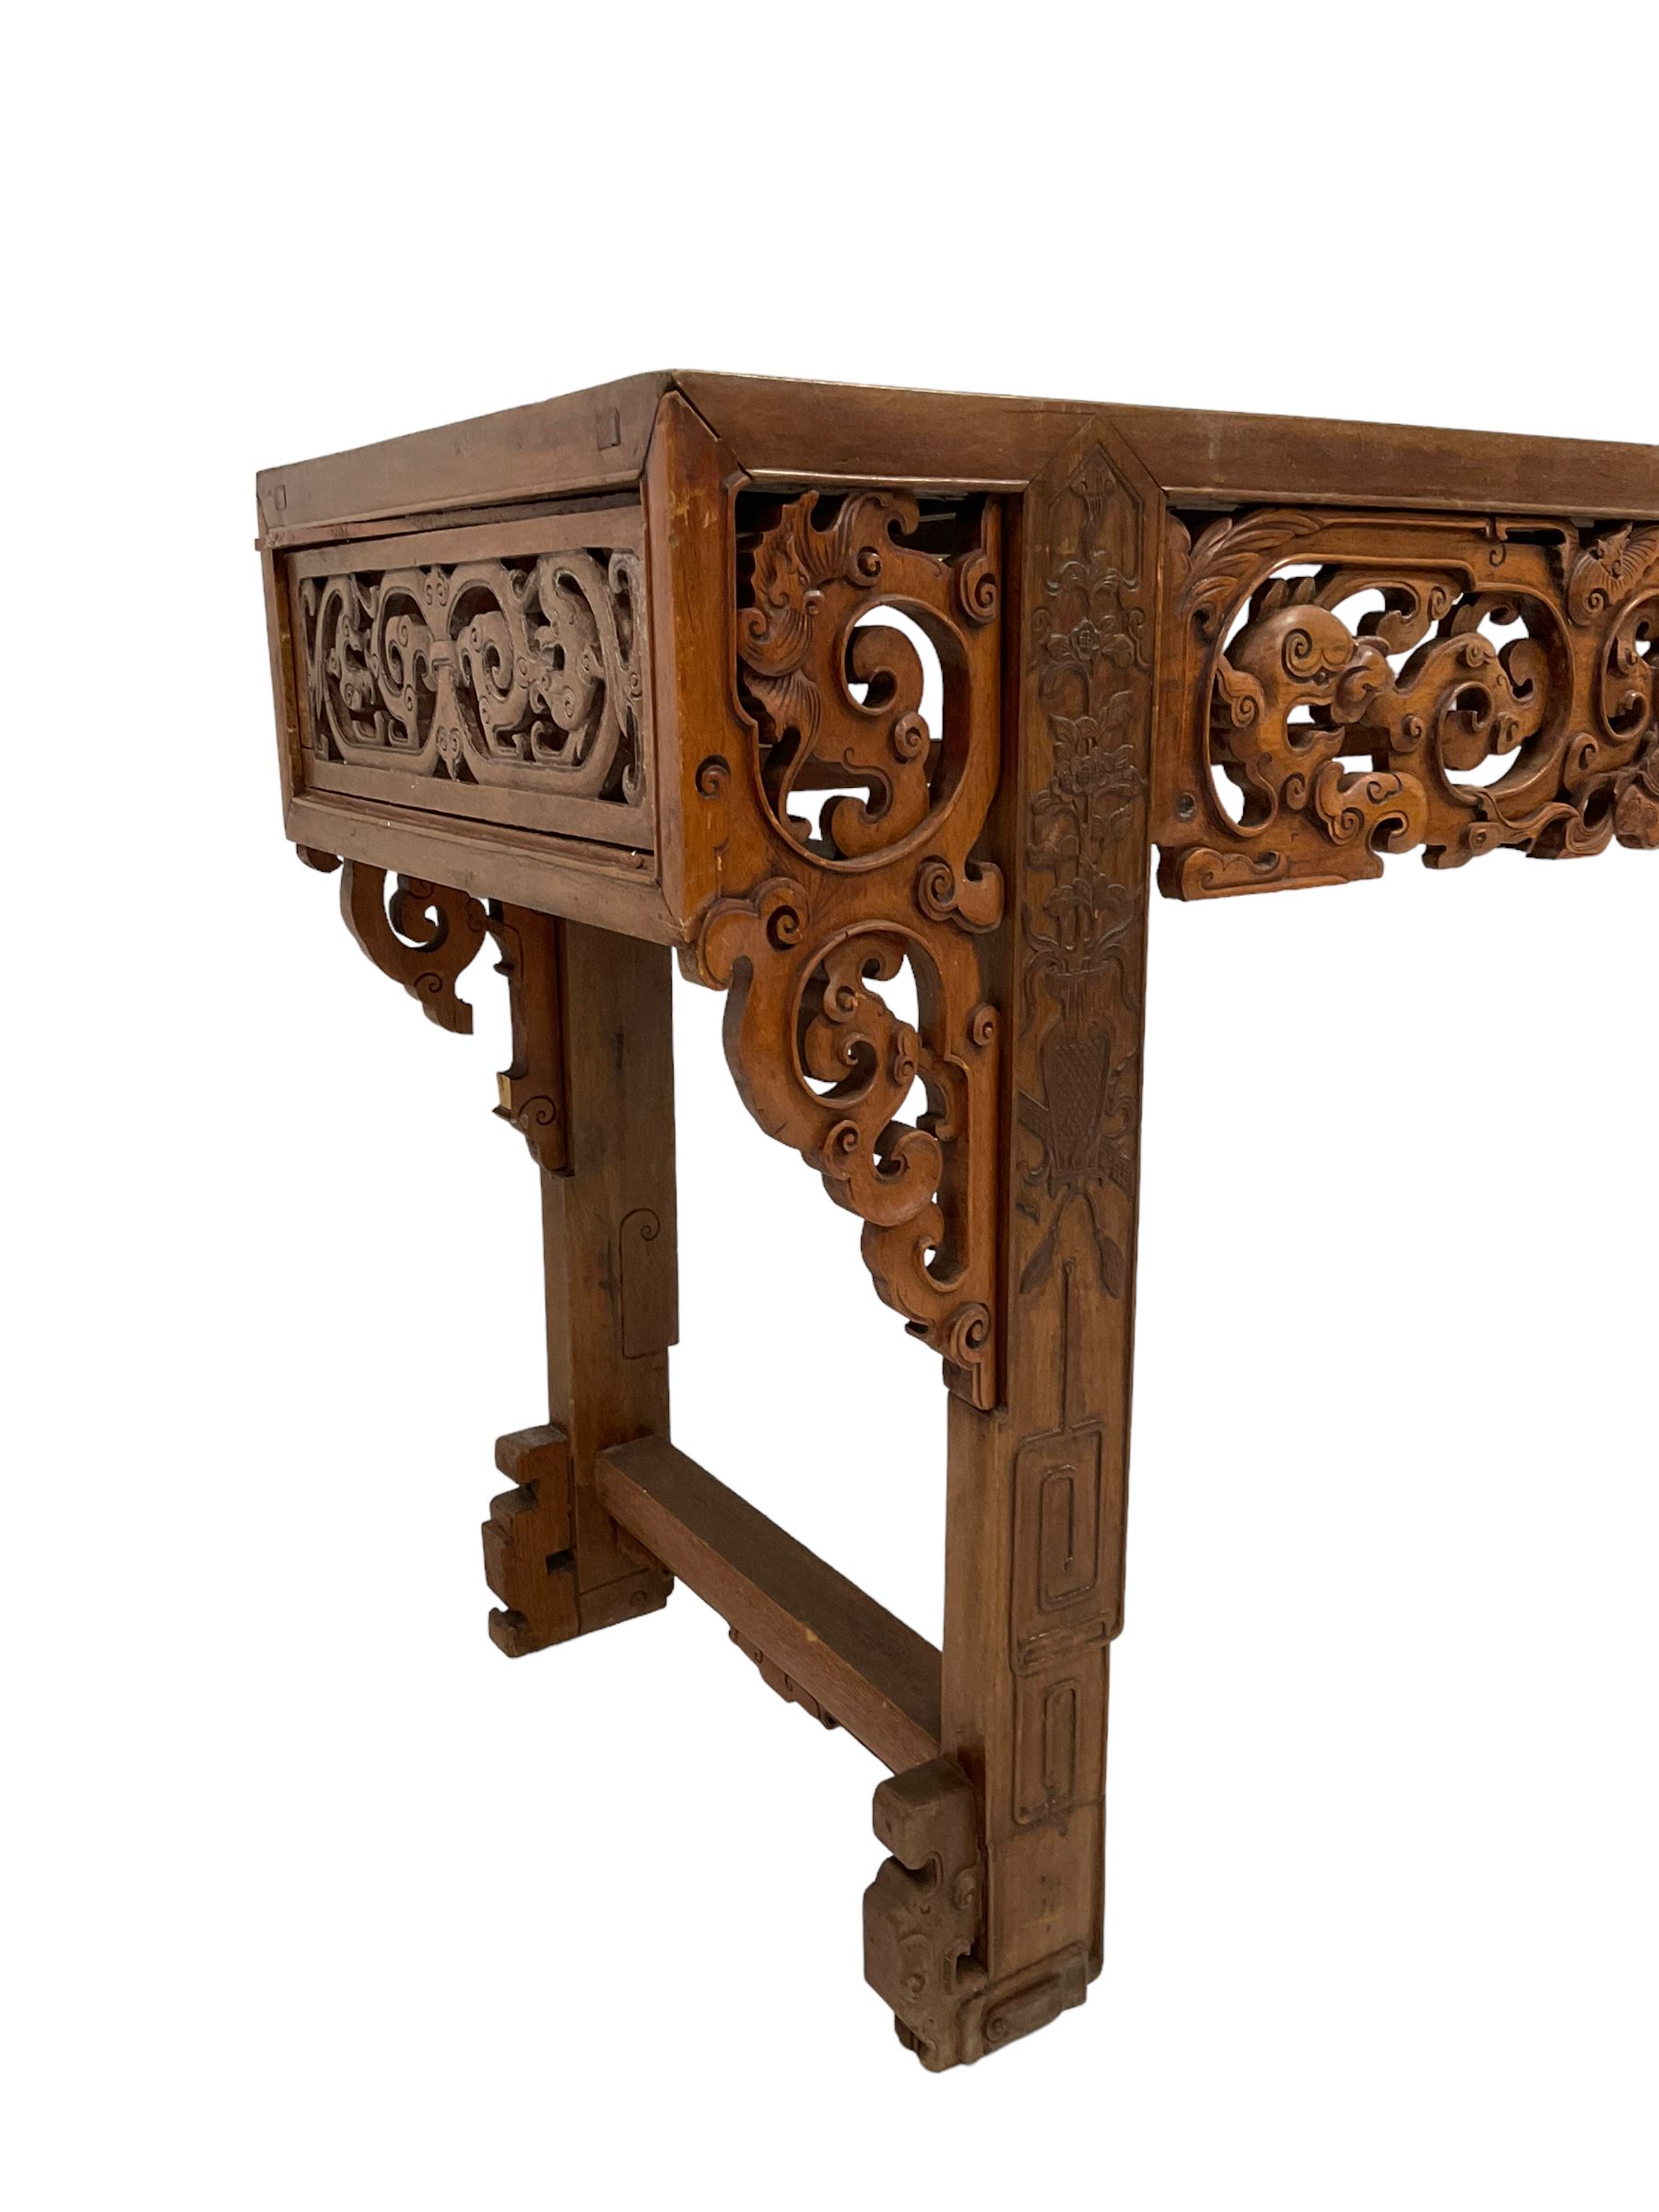 Large 19th century Chinese hardwood altar table - Image 3 of 11